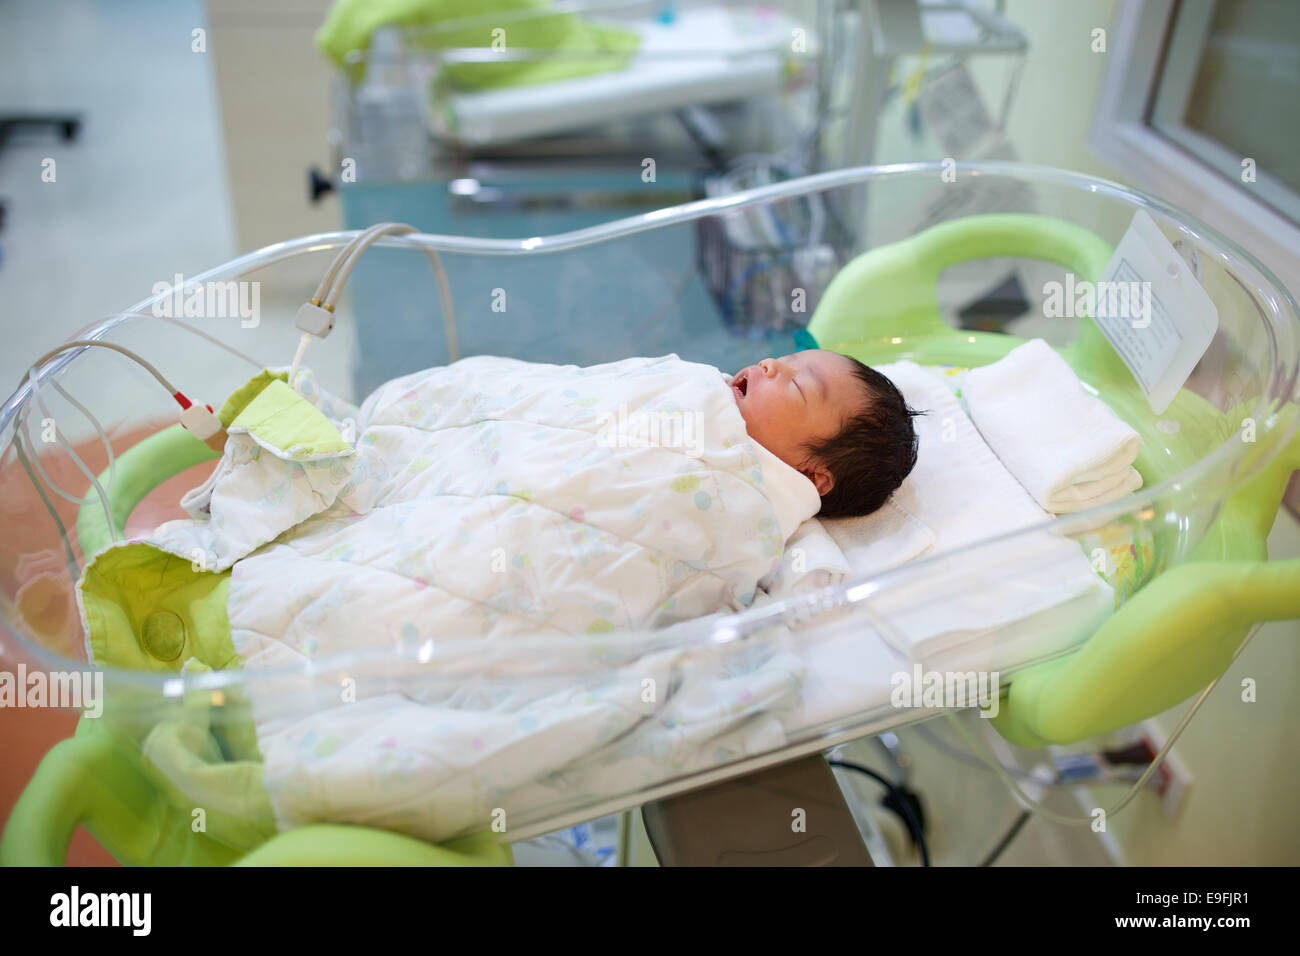 hospital newborn bassinet